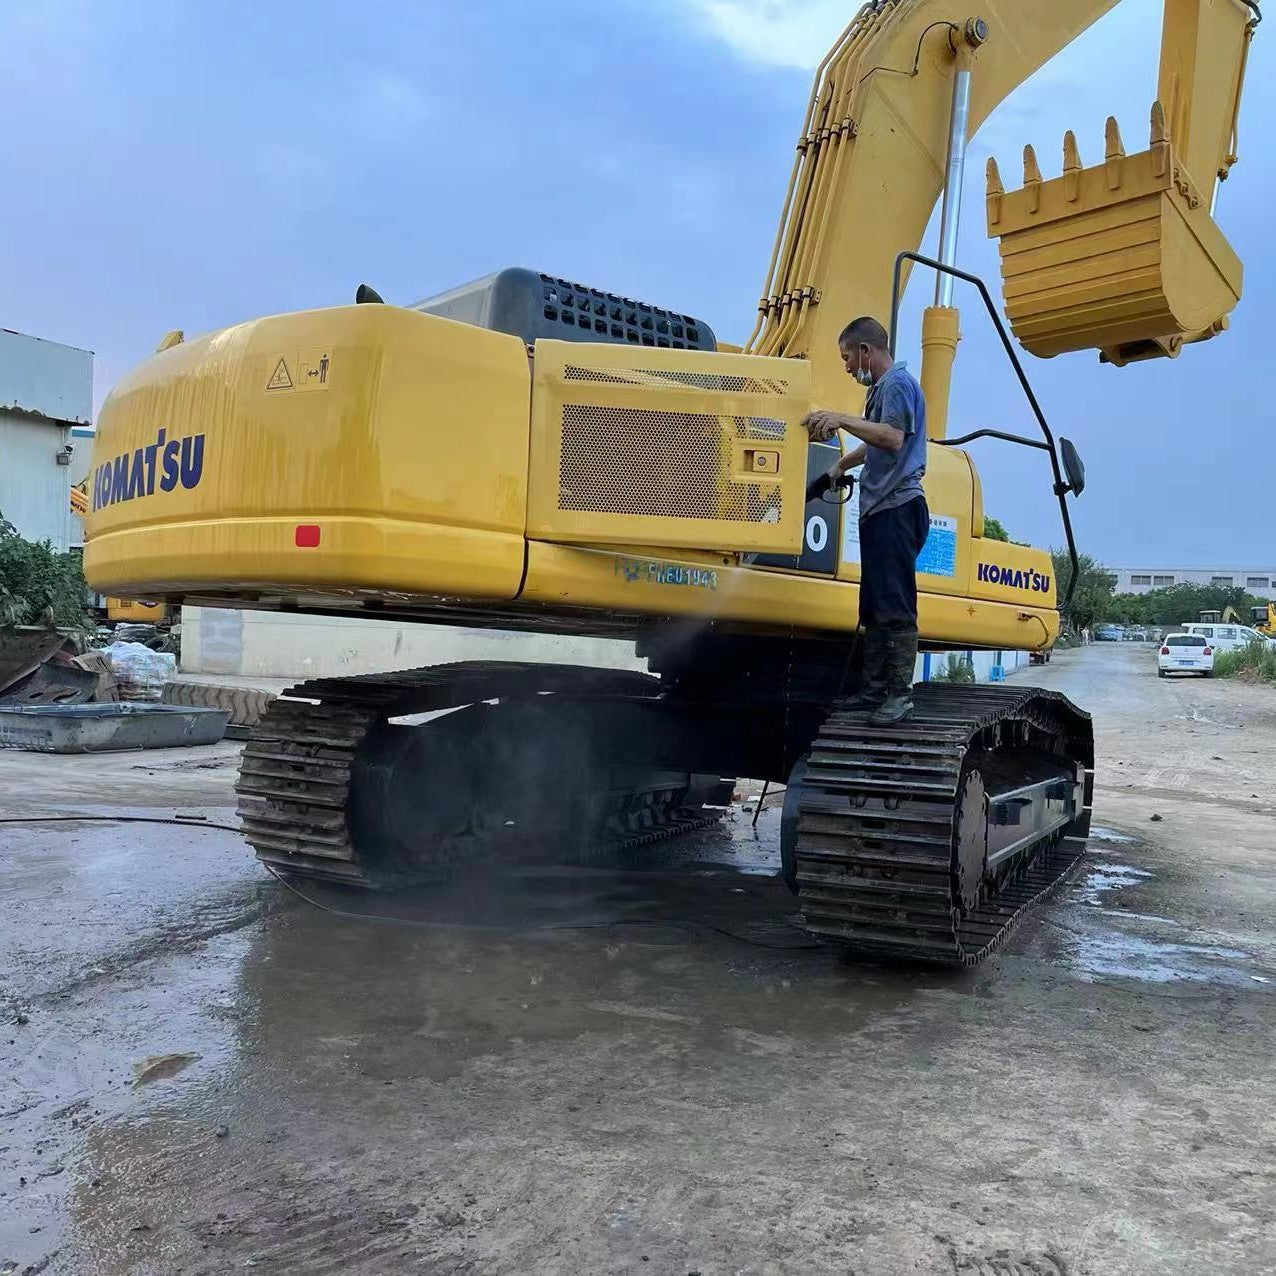 Komatsu-400 used crawler excavator for sale large excavator engine 1 ton machine price for sale large excavator